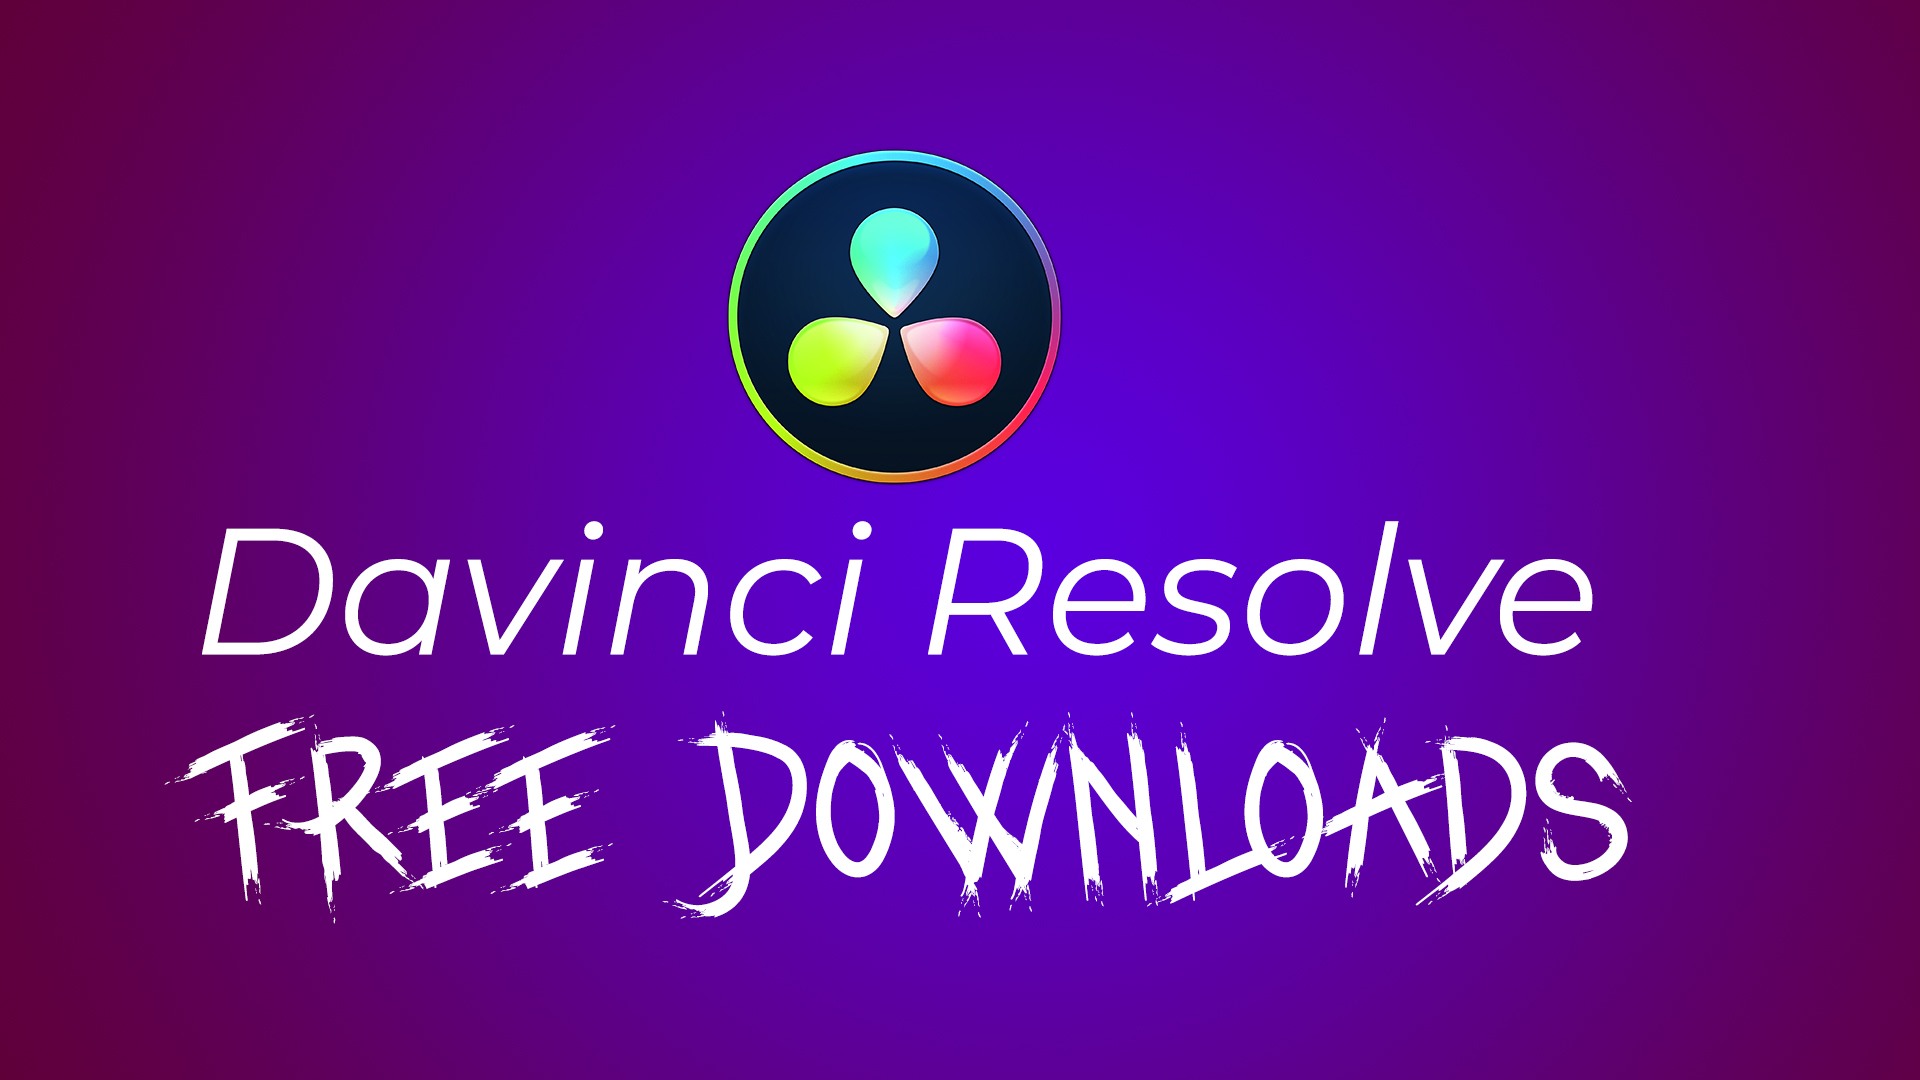 Free Davinci Resolve Templates Download - MeinVideo Studio